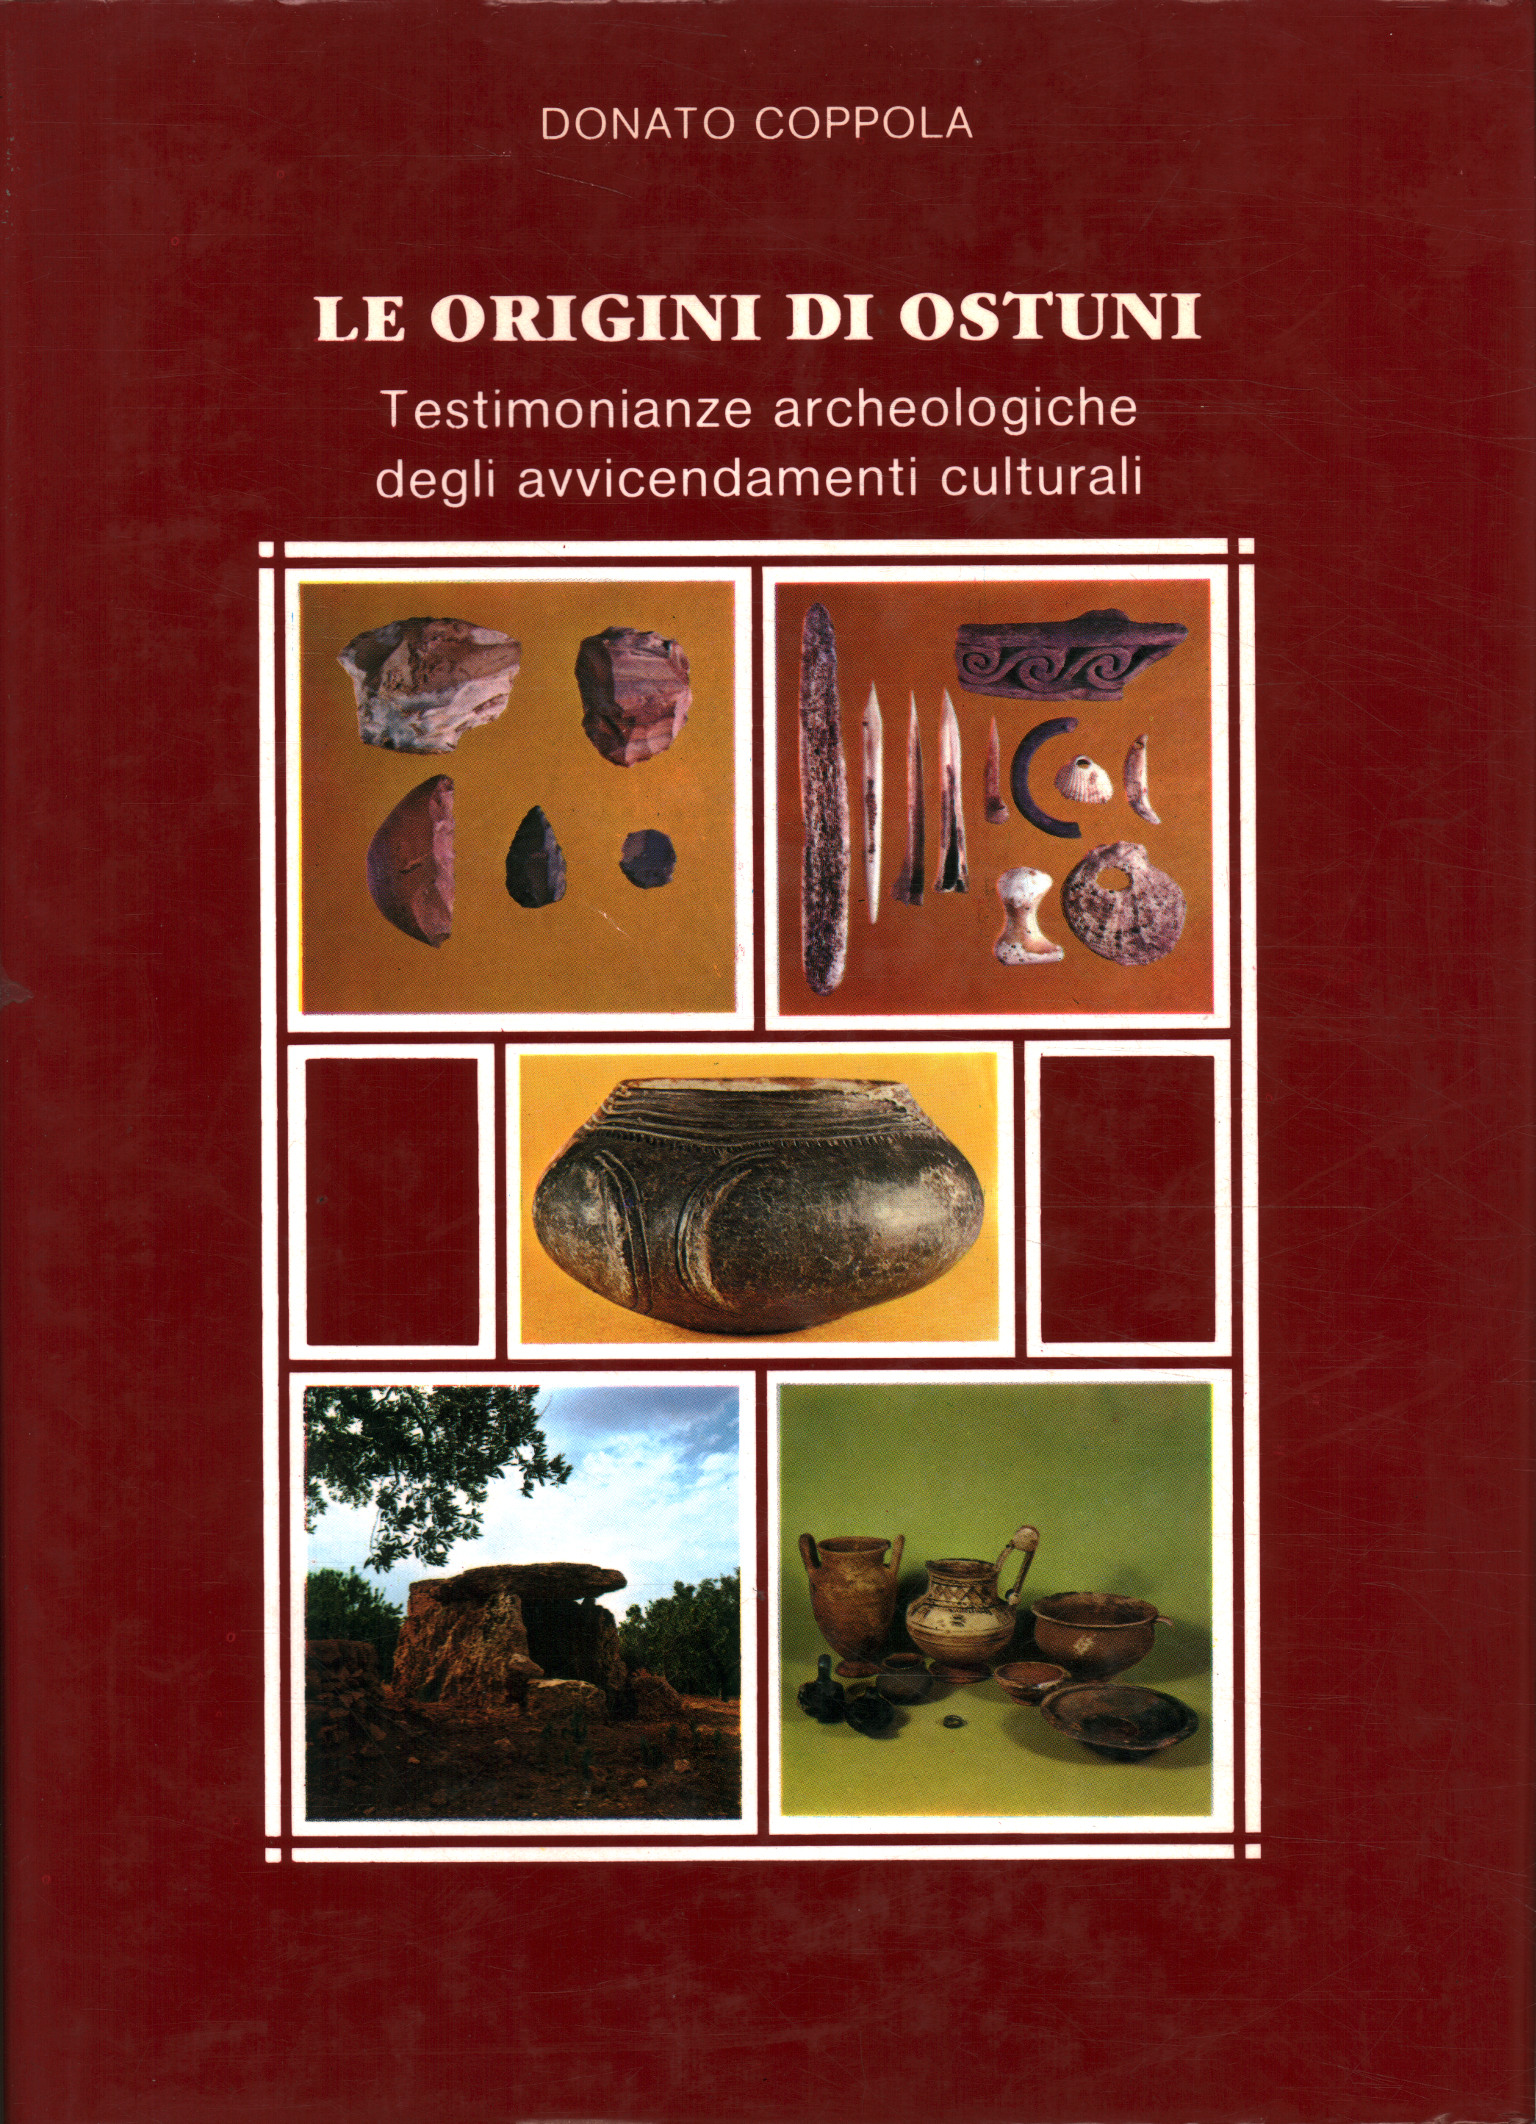 The origins of Ostuni